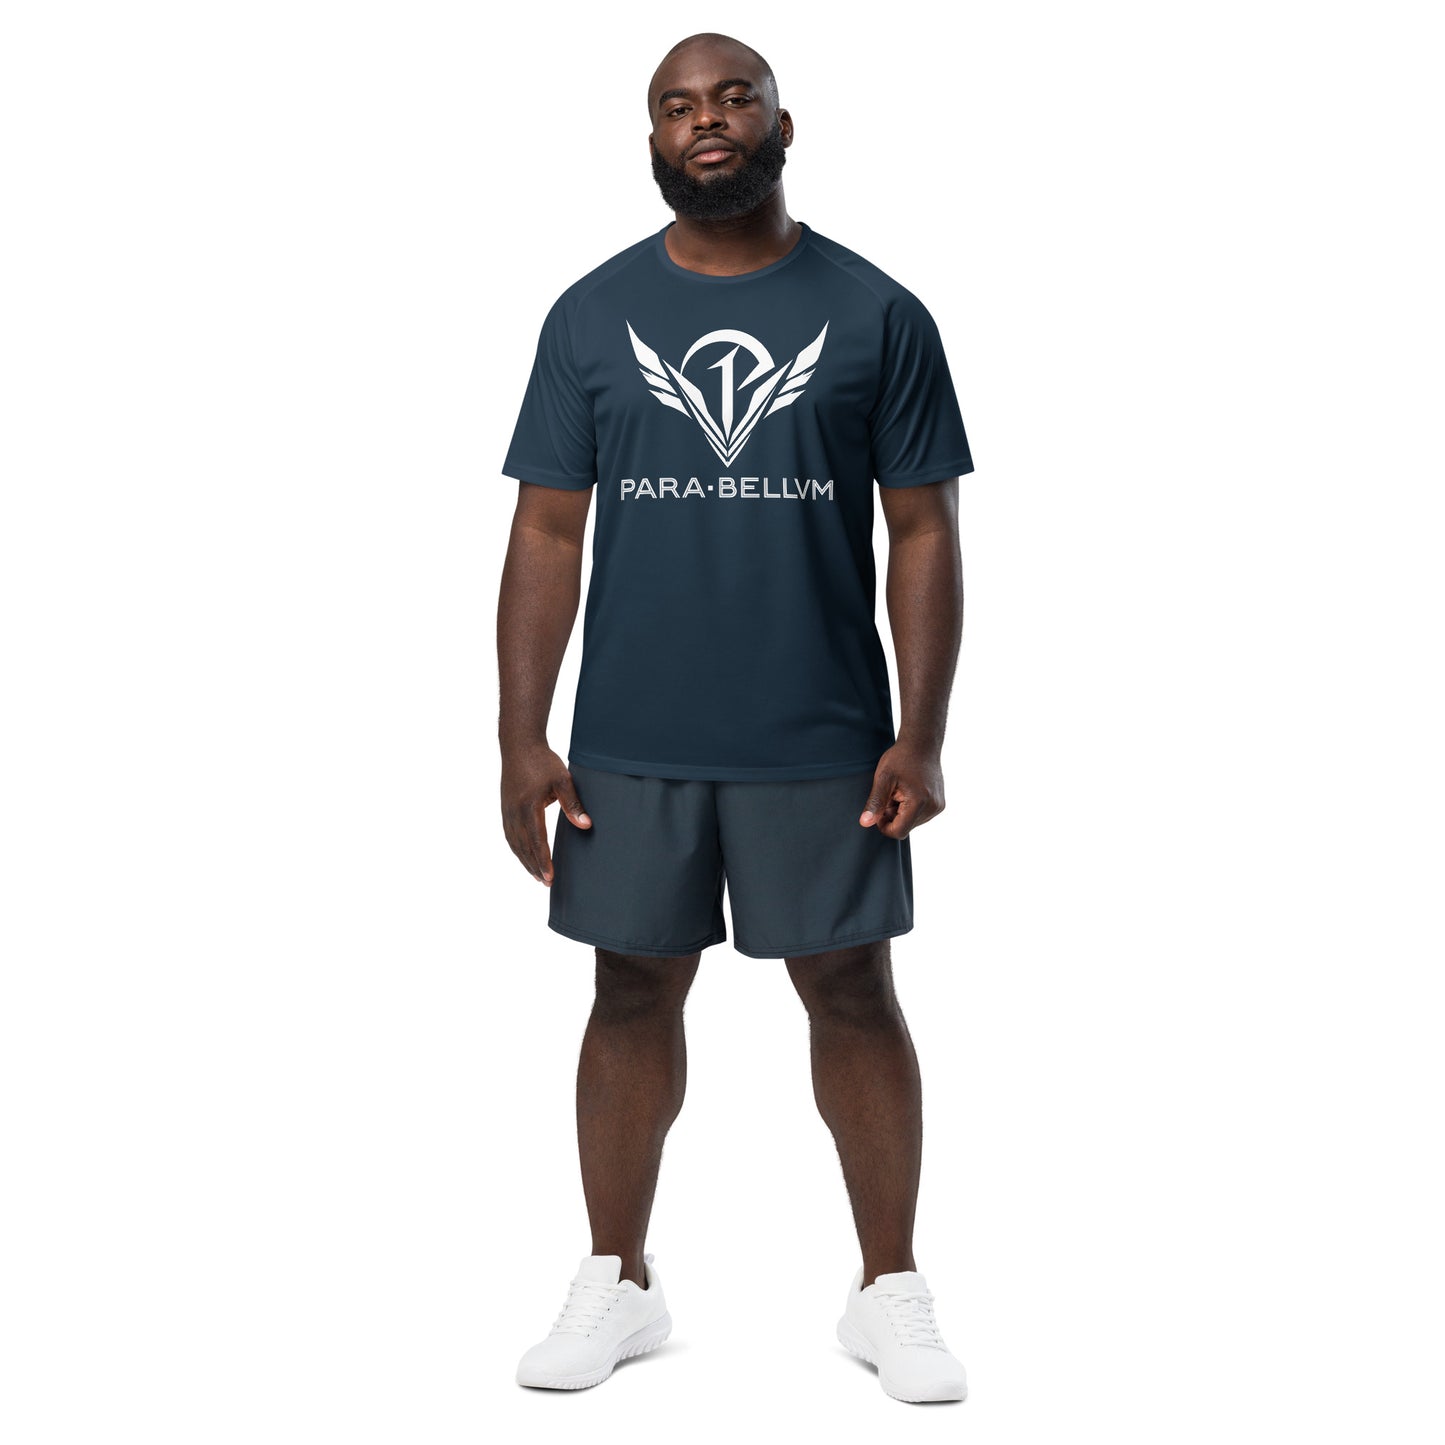 PBV-2024-0004 (Unisex sports jersey)